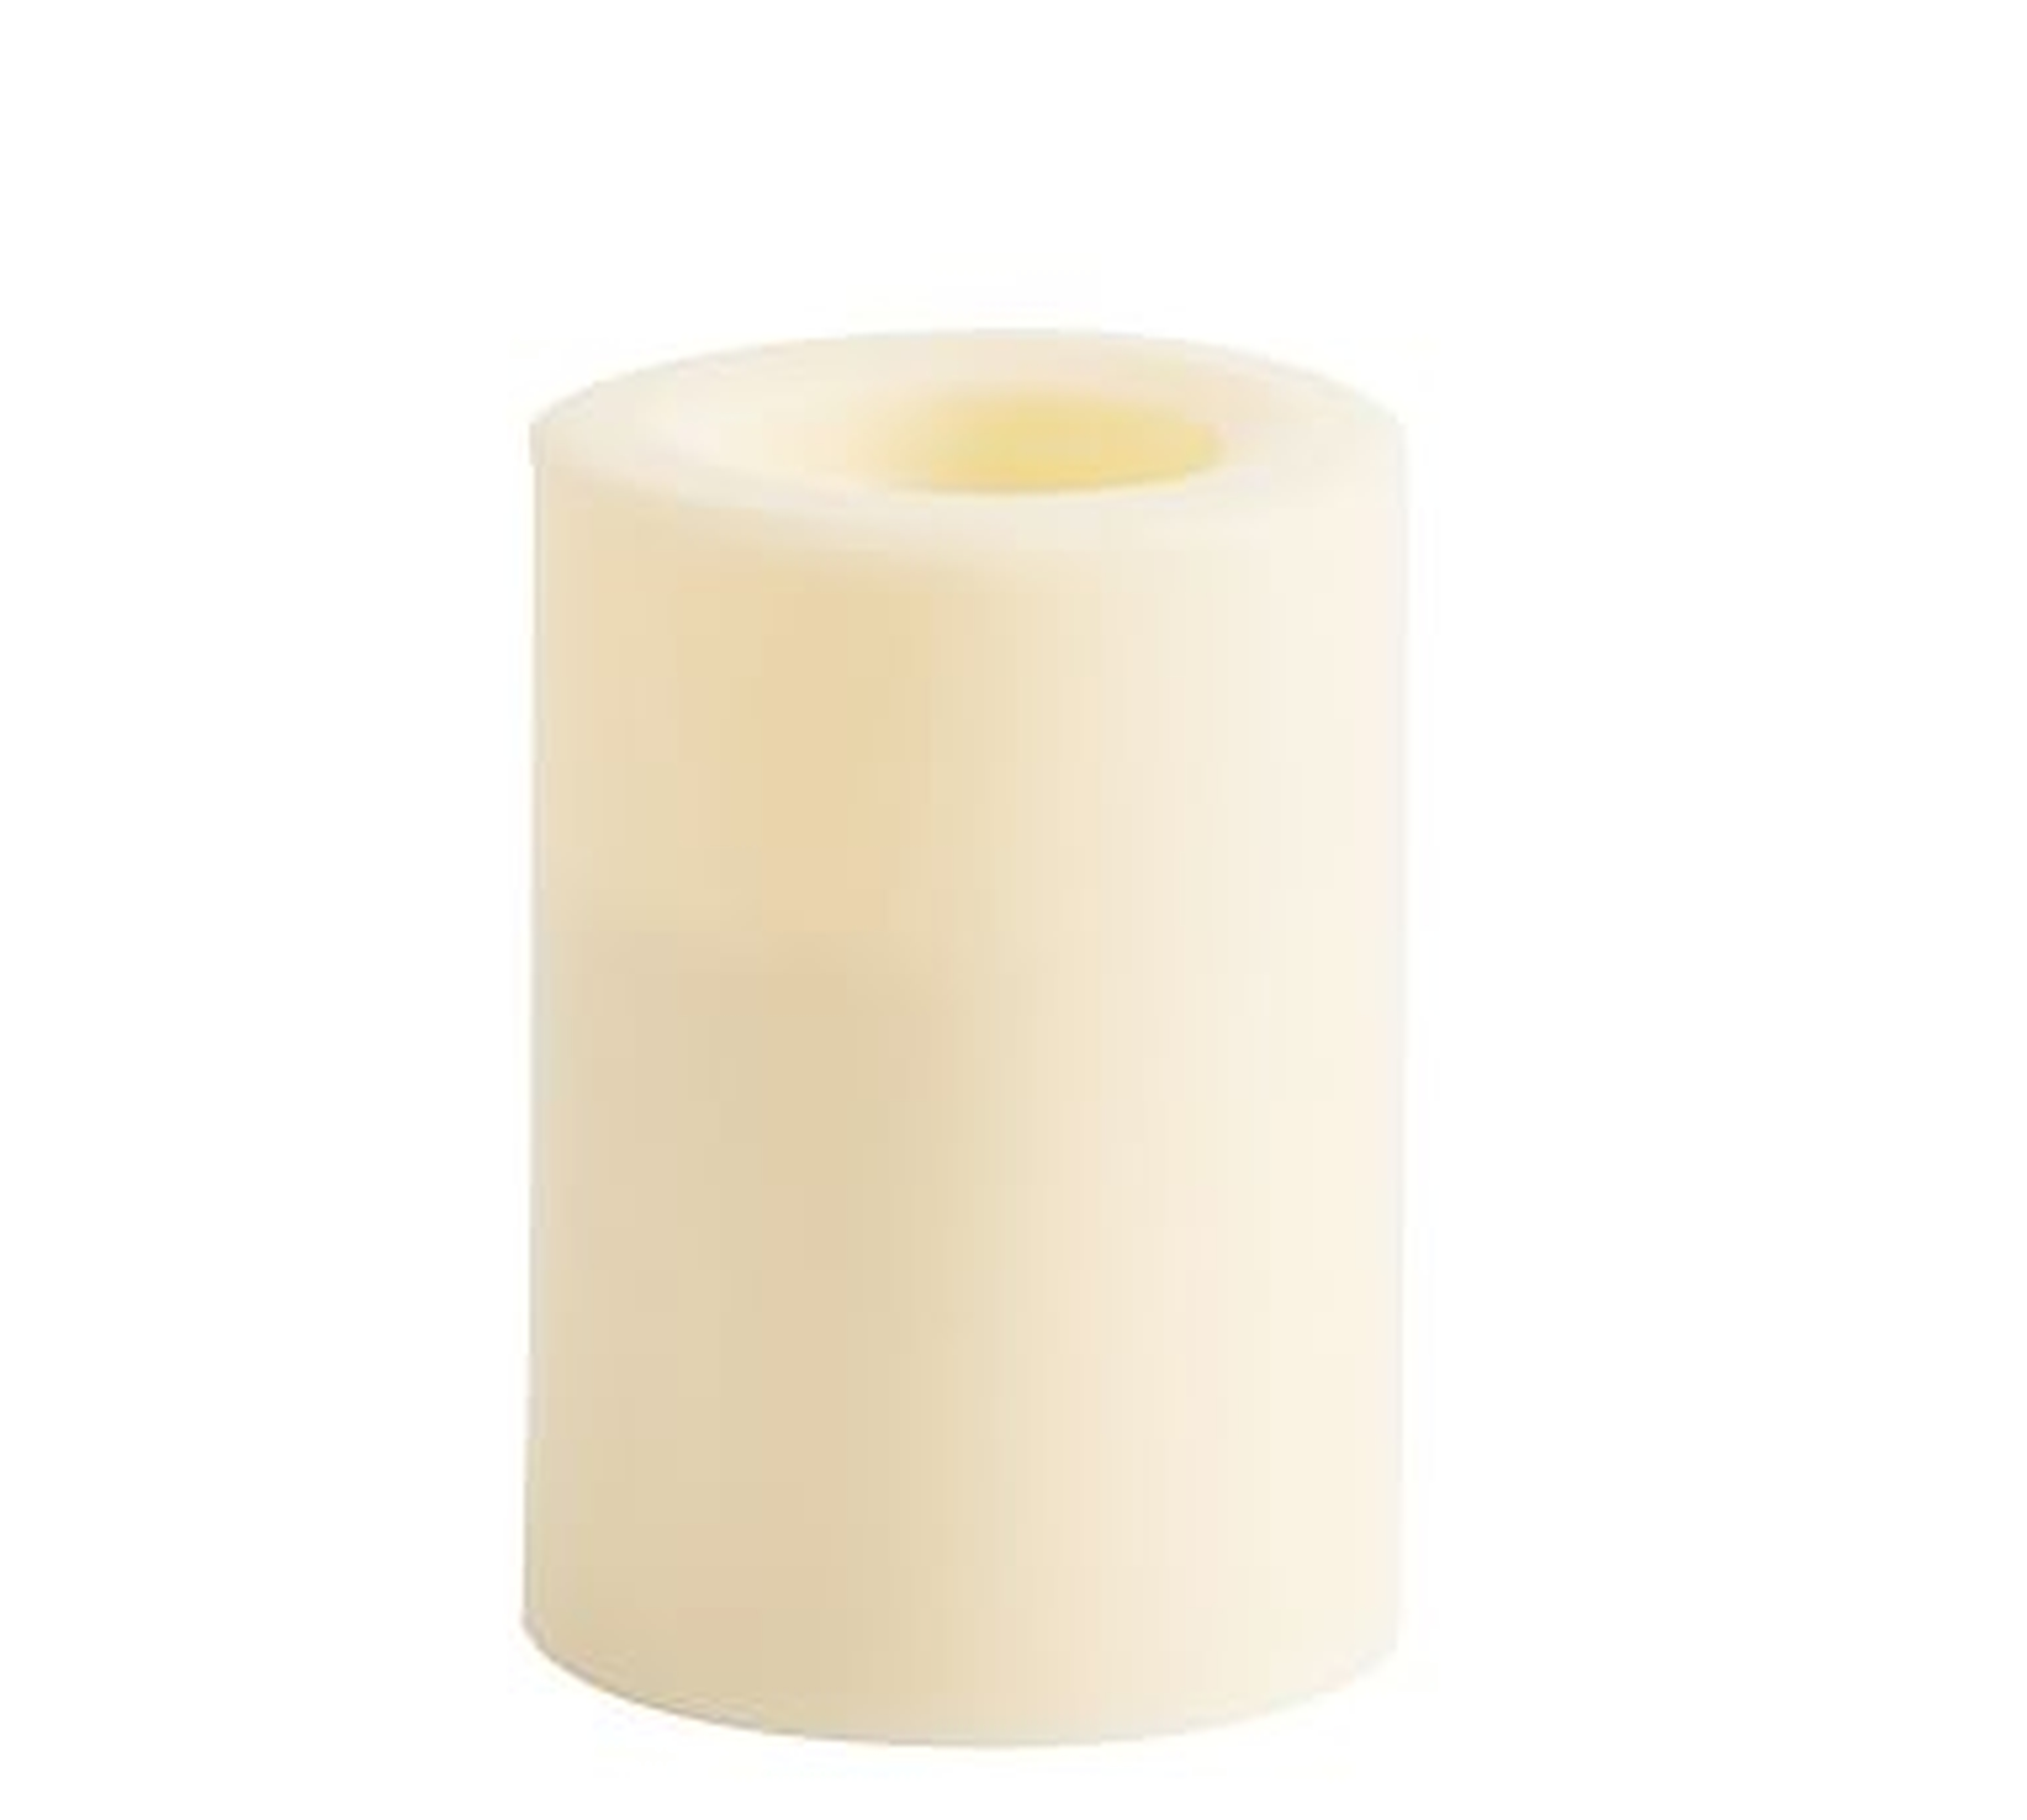 Standard Flameless Outdoor Pillar Candle, 3.25"x4.5" - Ivory - Pottery Barn